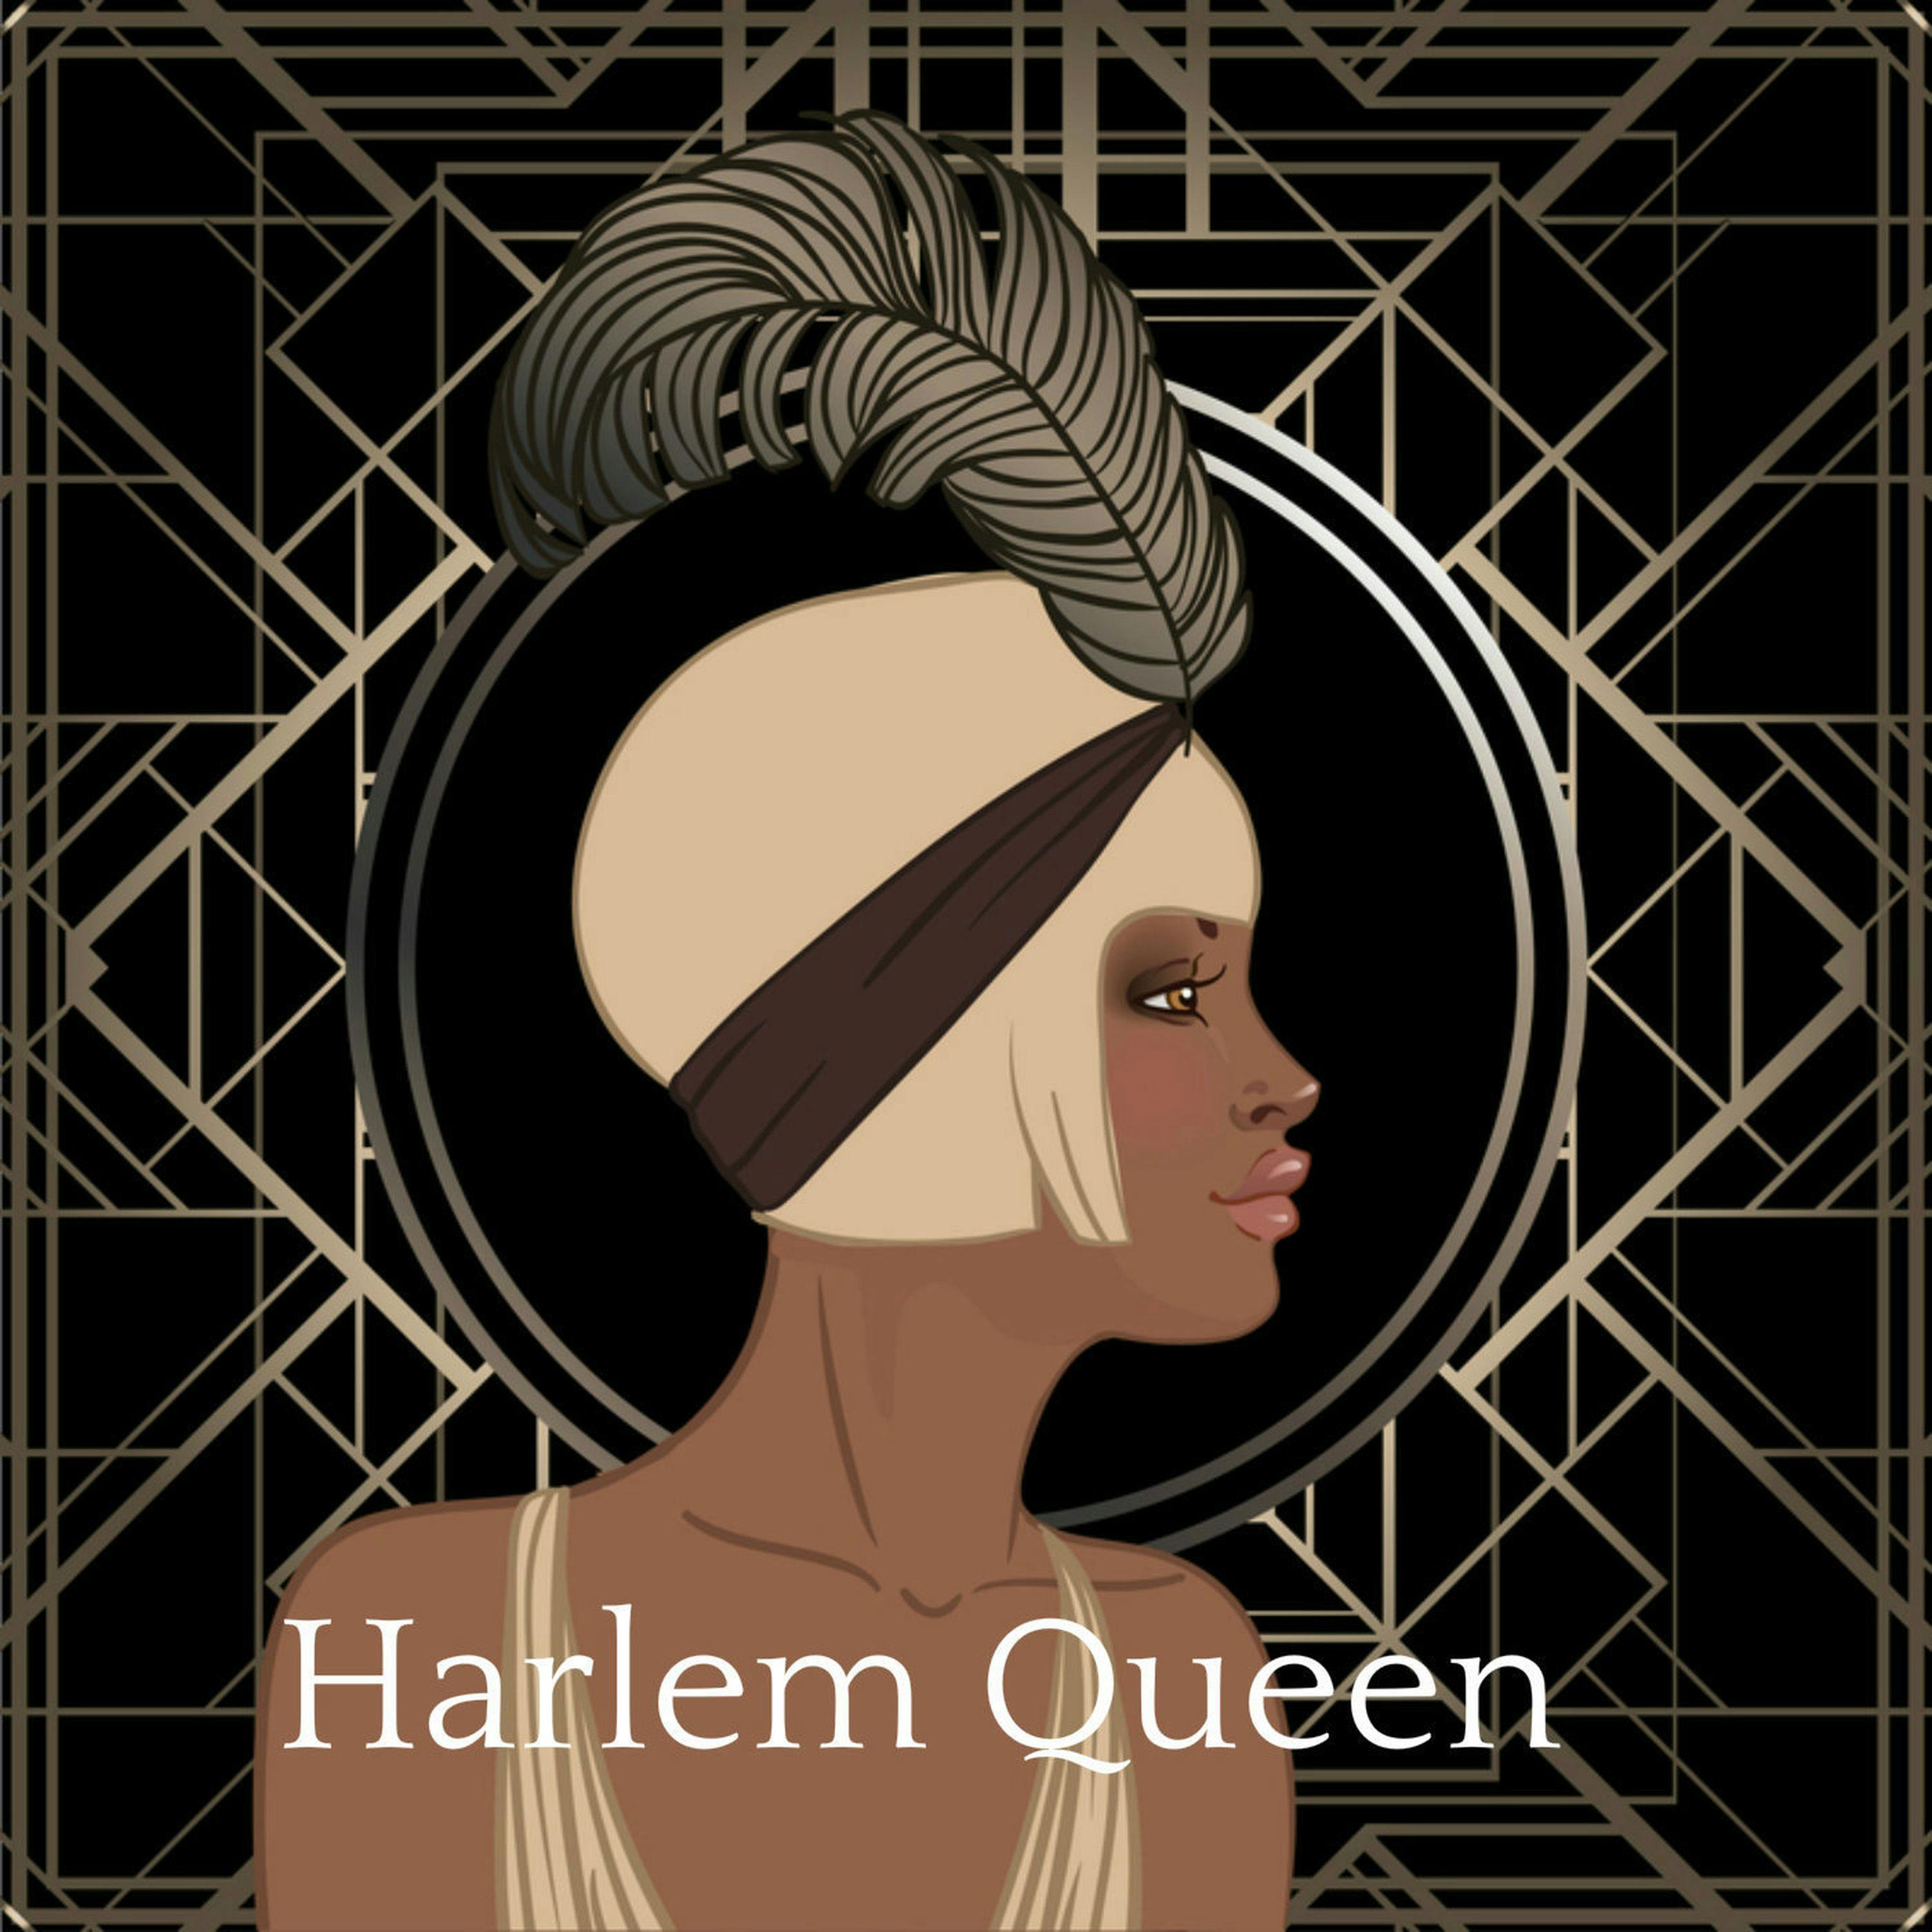 Harlem Queen - Historical Fiction Audio Drama